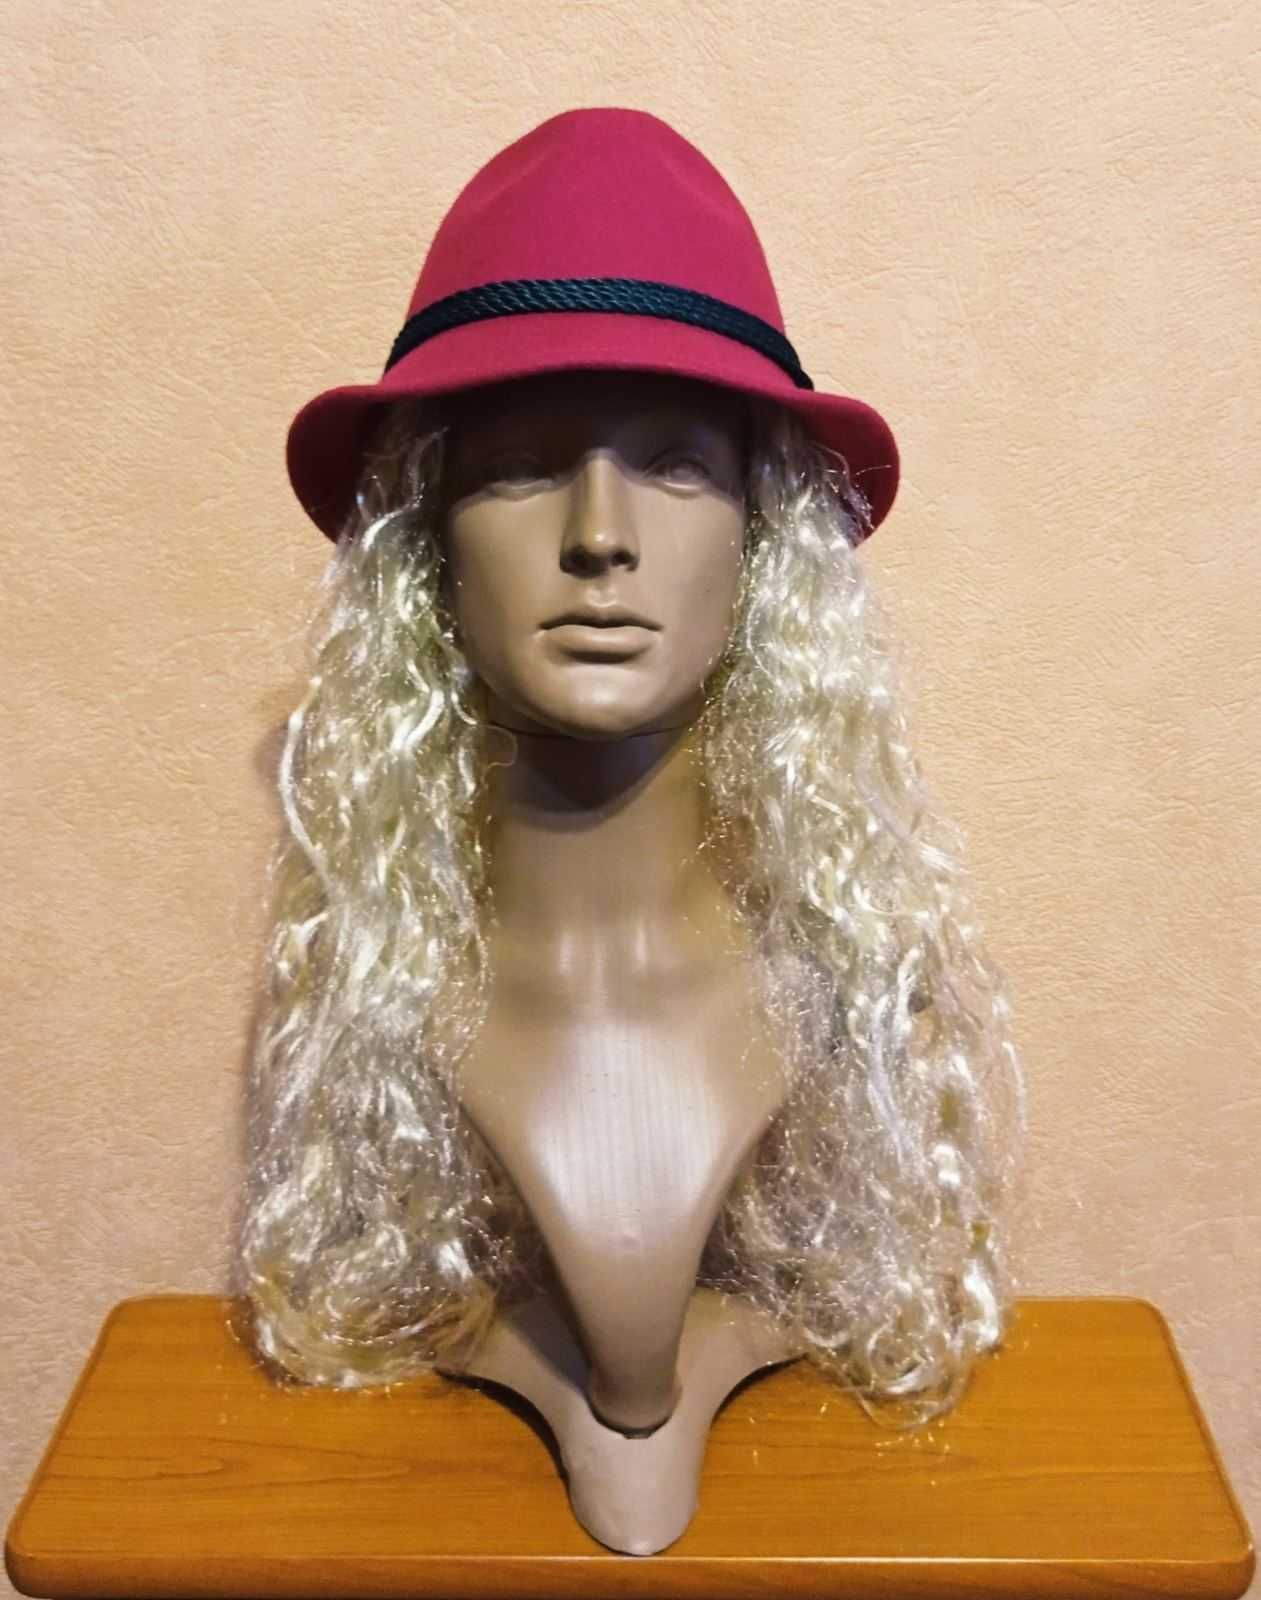 Яркая розовая шляпа формы "Федора", 100% шерсть.